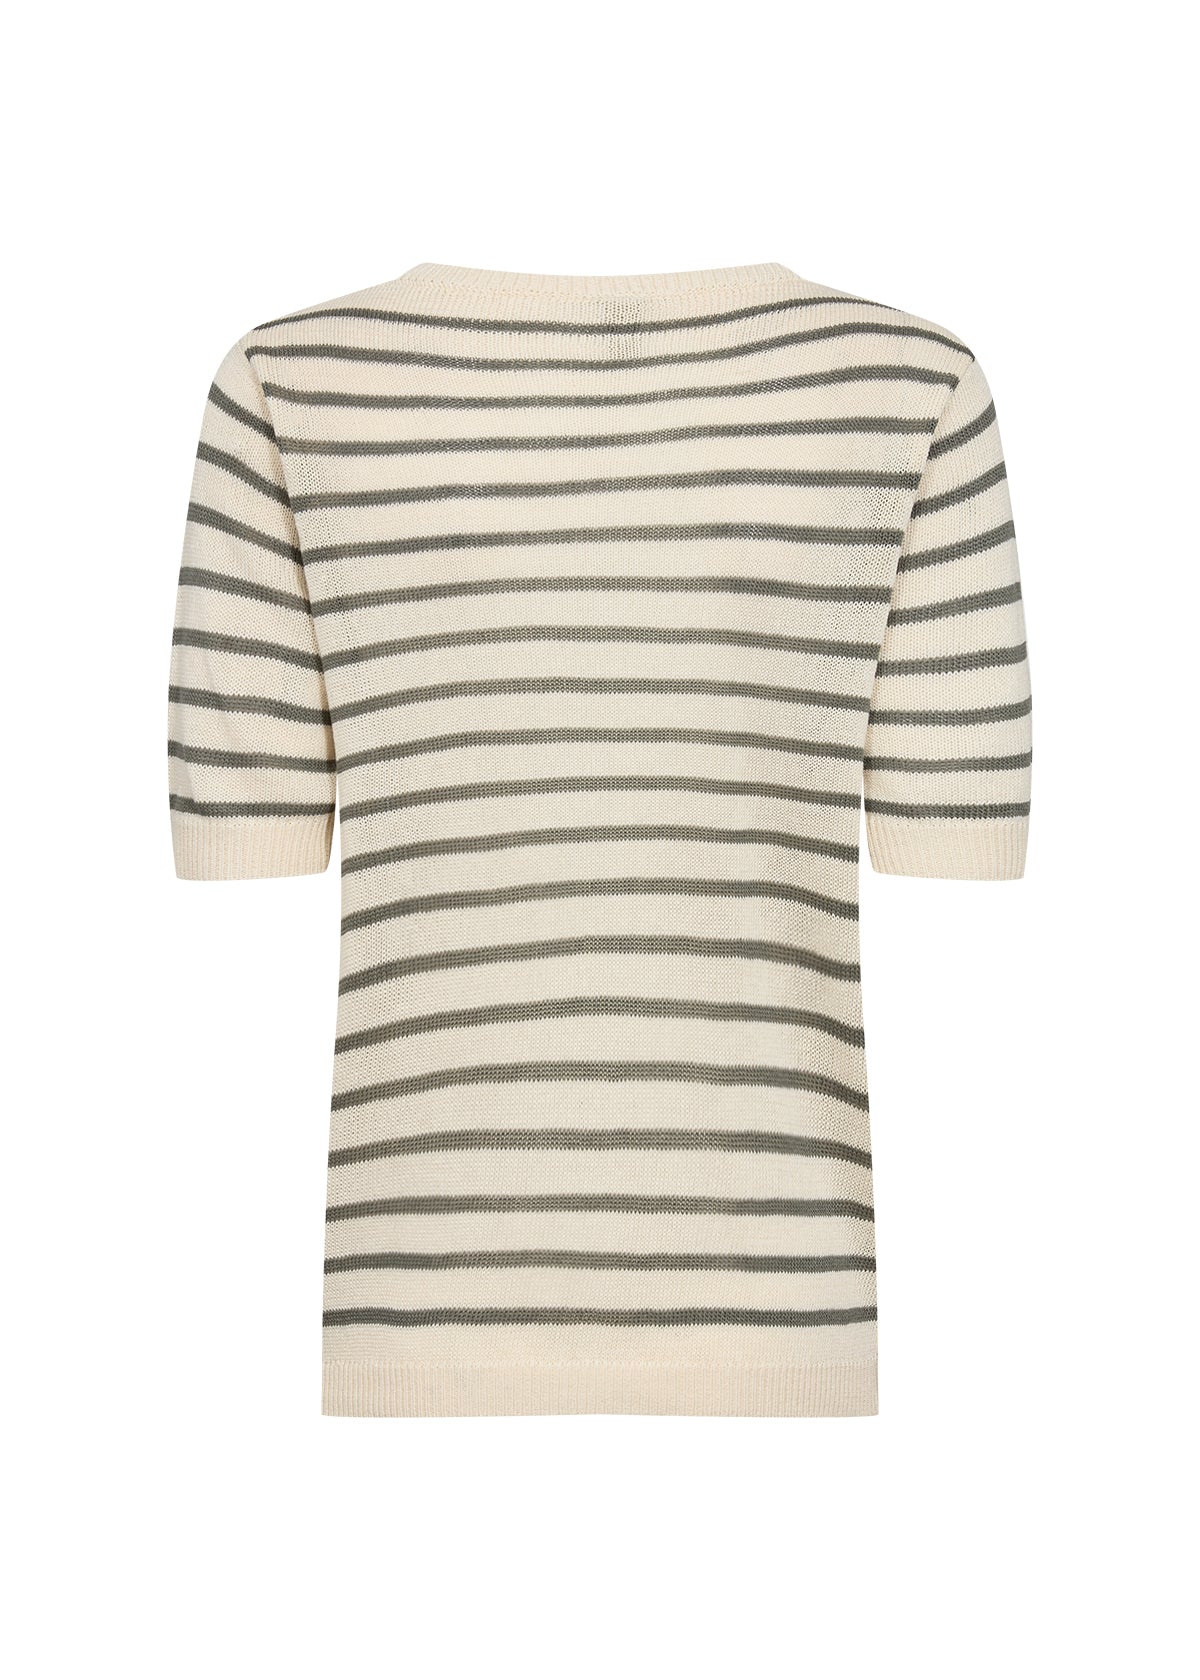 SOYA CONCEPT Luanna 1 Cream & Khaki Striped Shirt